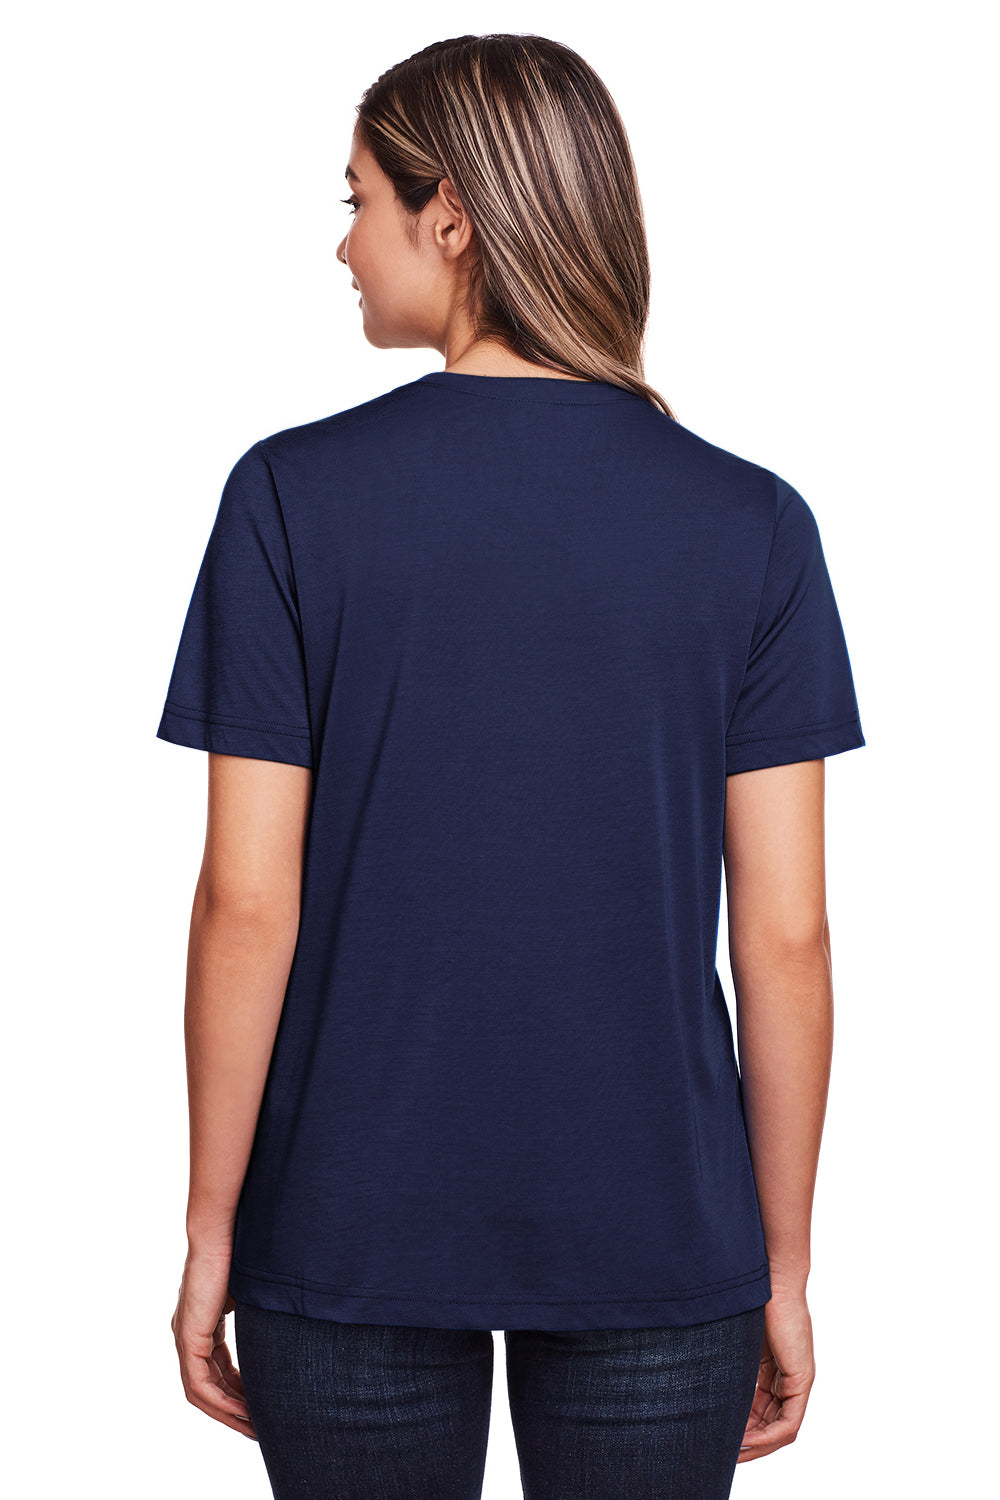 Core 365 CE111W Womens Fusion ChromaSoft Performance Moisture Wicking Short Sleeve Scoop Neck T-Shirt Navy Blue Back